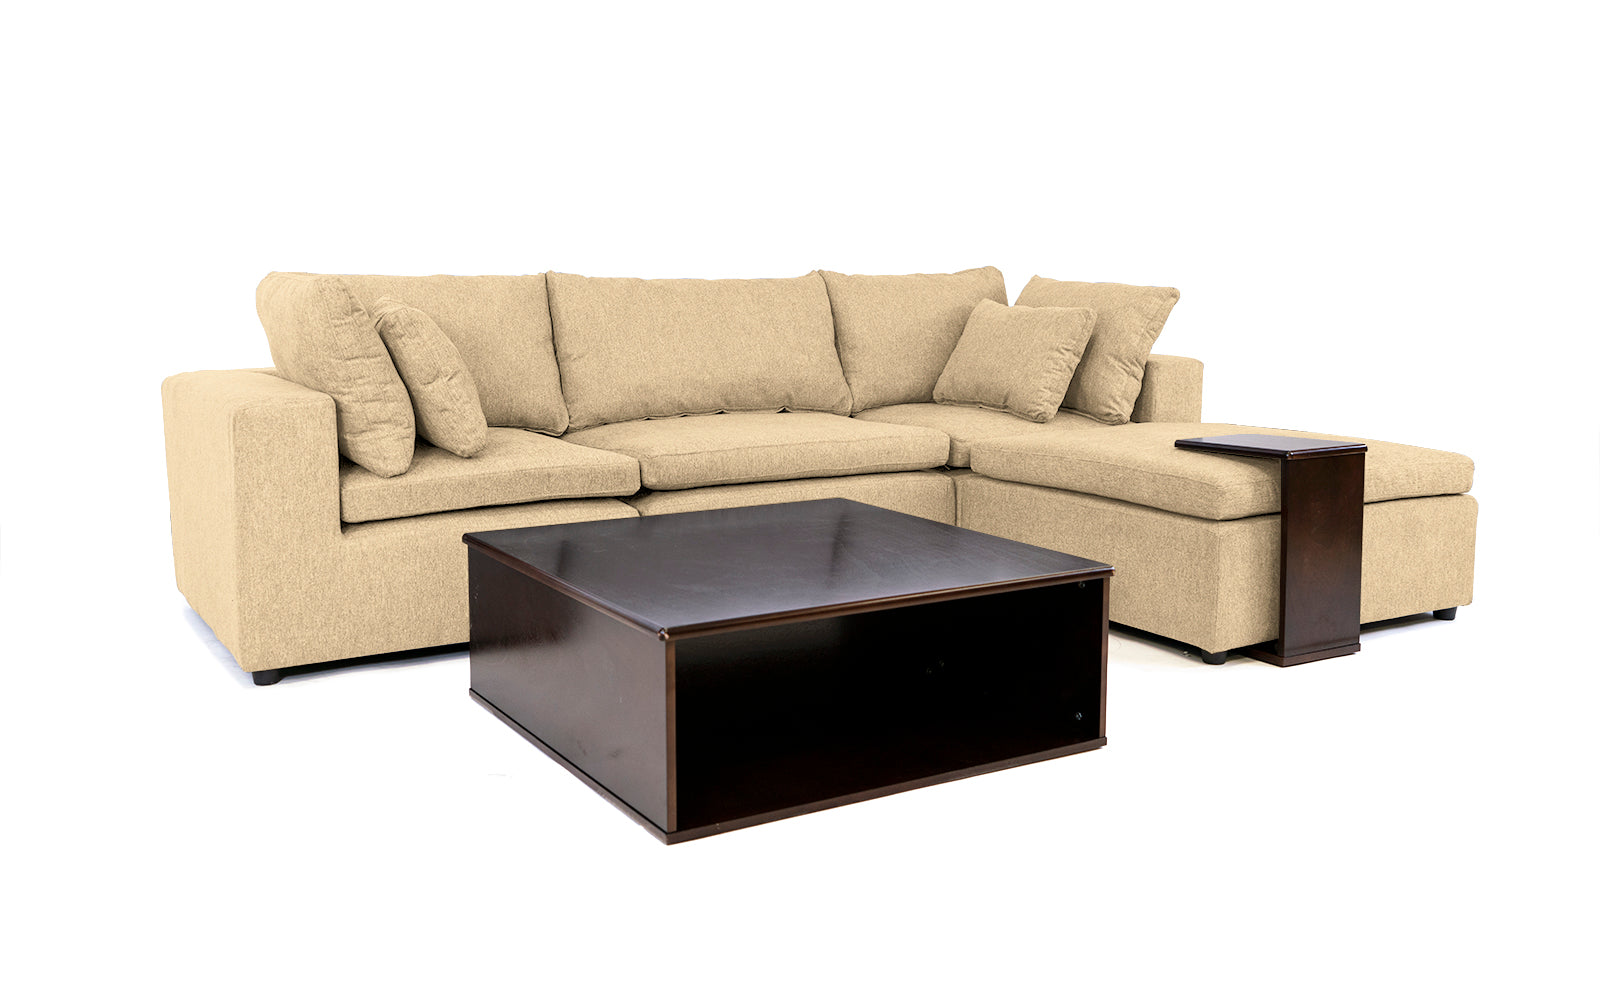 Jordan Configurable Linen Sectional Sofa With Coffee Table